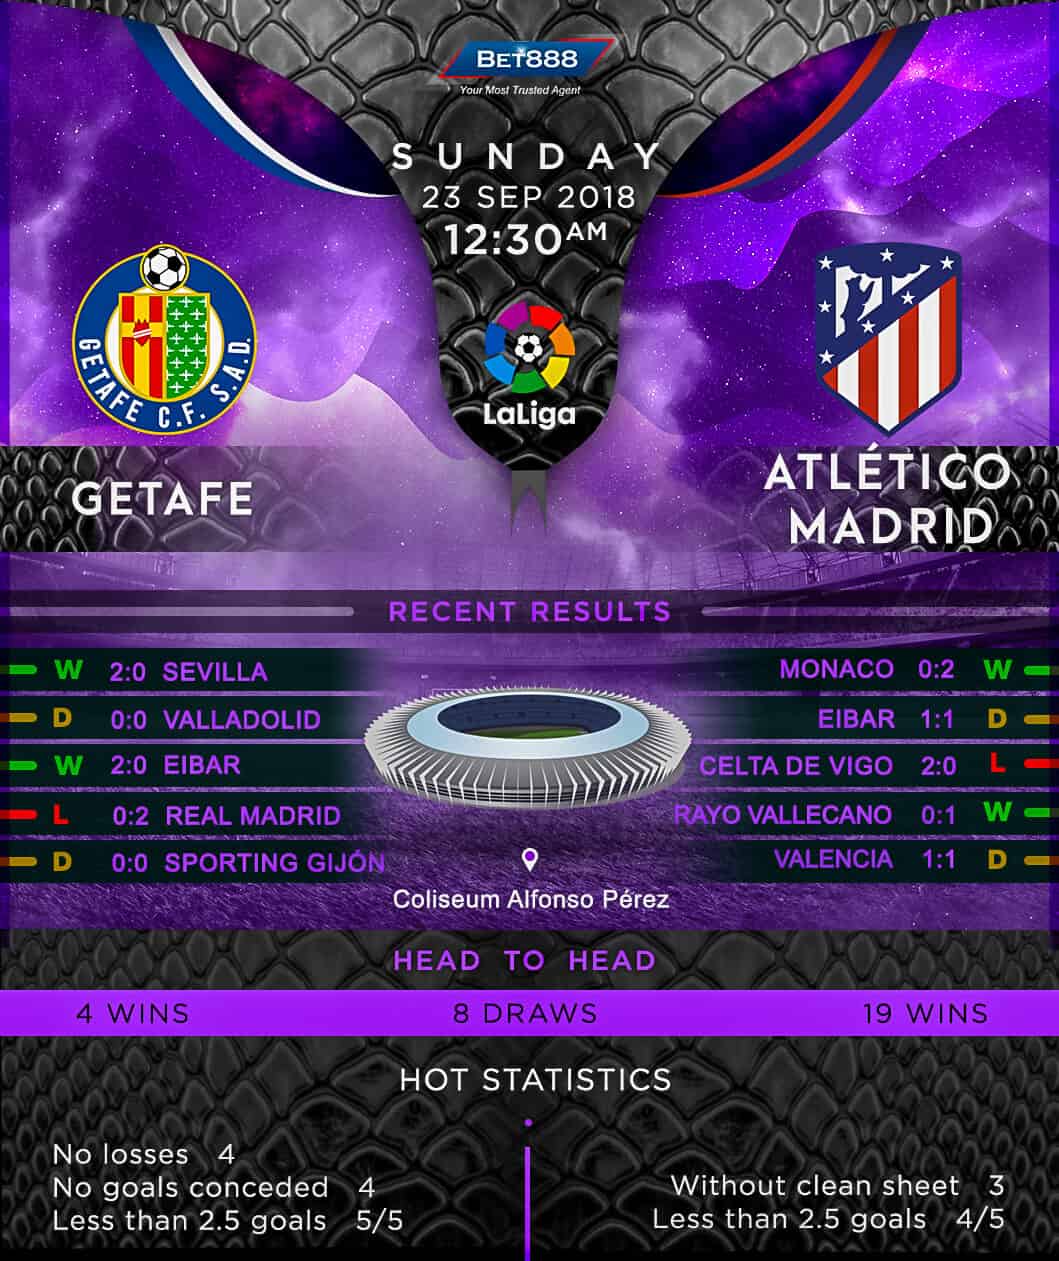 Getafe vs Atletico Madrid 23/09/18